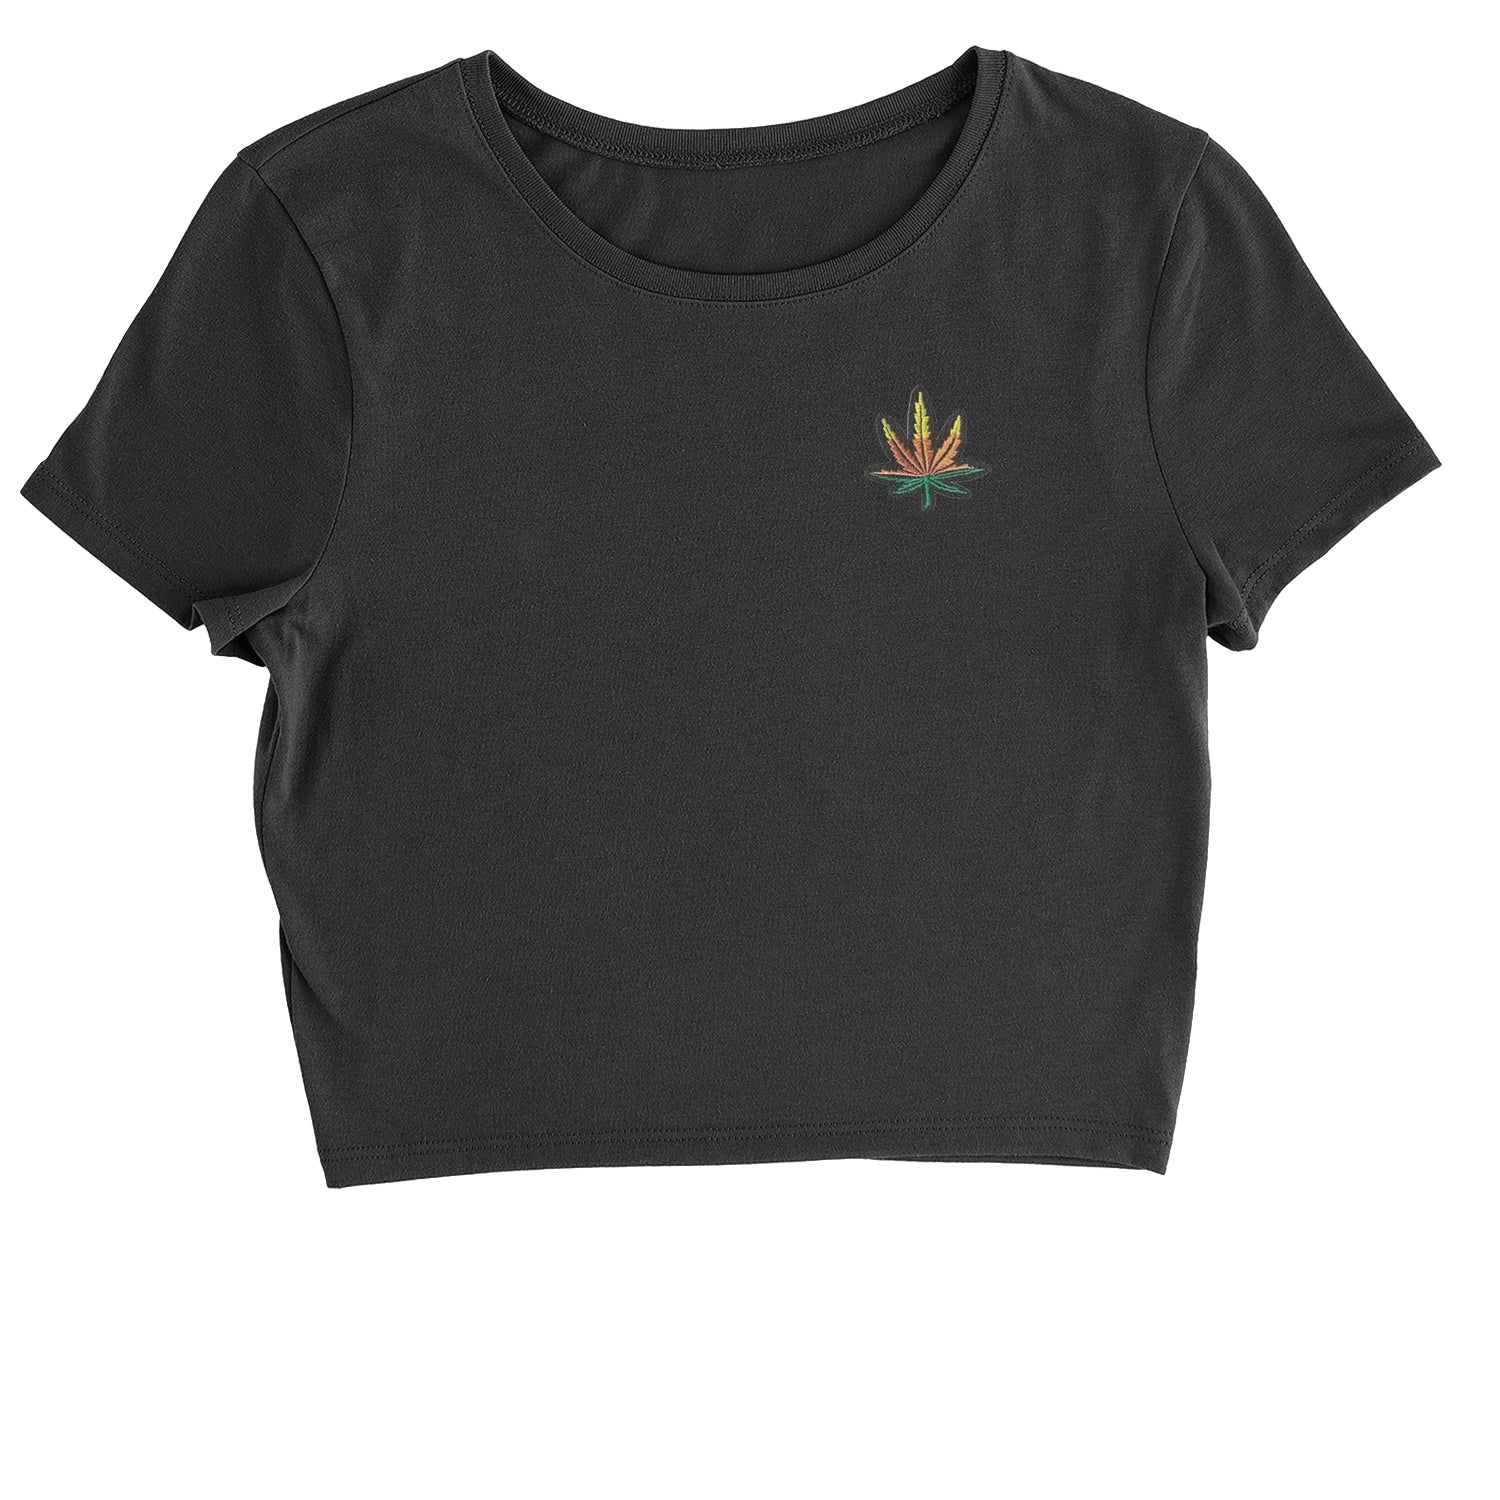 Embroidered Rasta Pot Leaf Patch (Pocket Print) Cropped T-Shirt bob, legalize, marijuana, marley, rastafarian, weed by Expression Tees